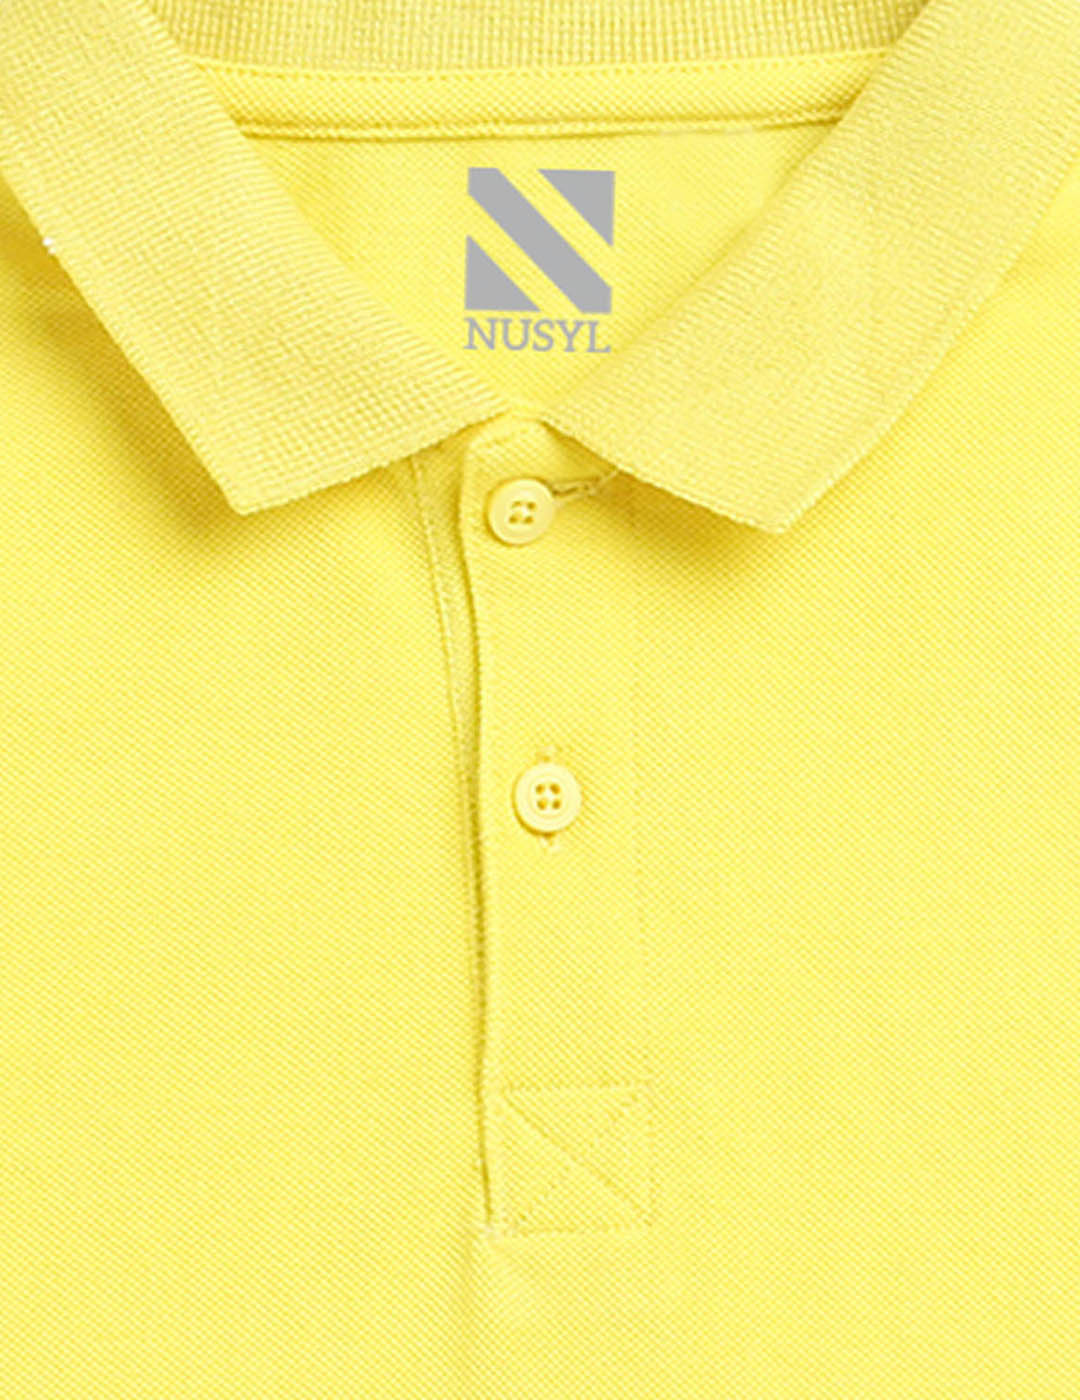 Nusyl Legendary Printed Bright yellow Boys polo T-shirts